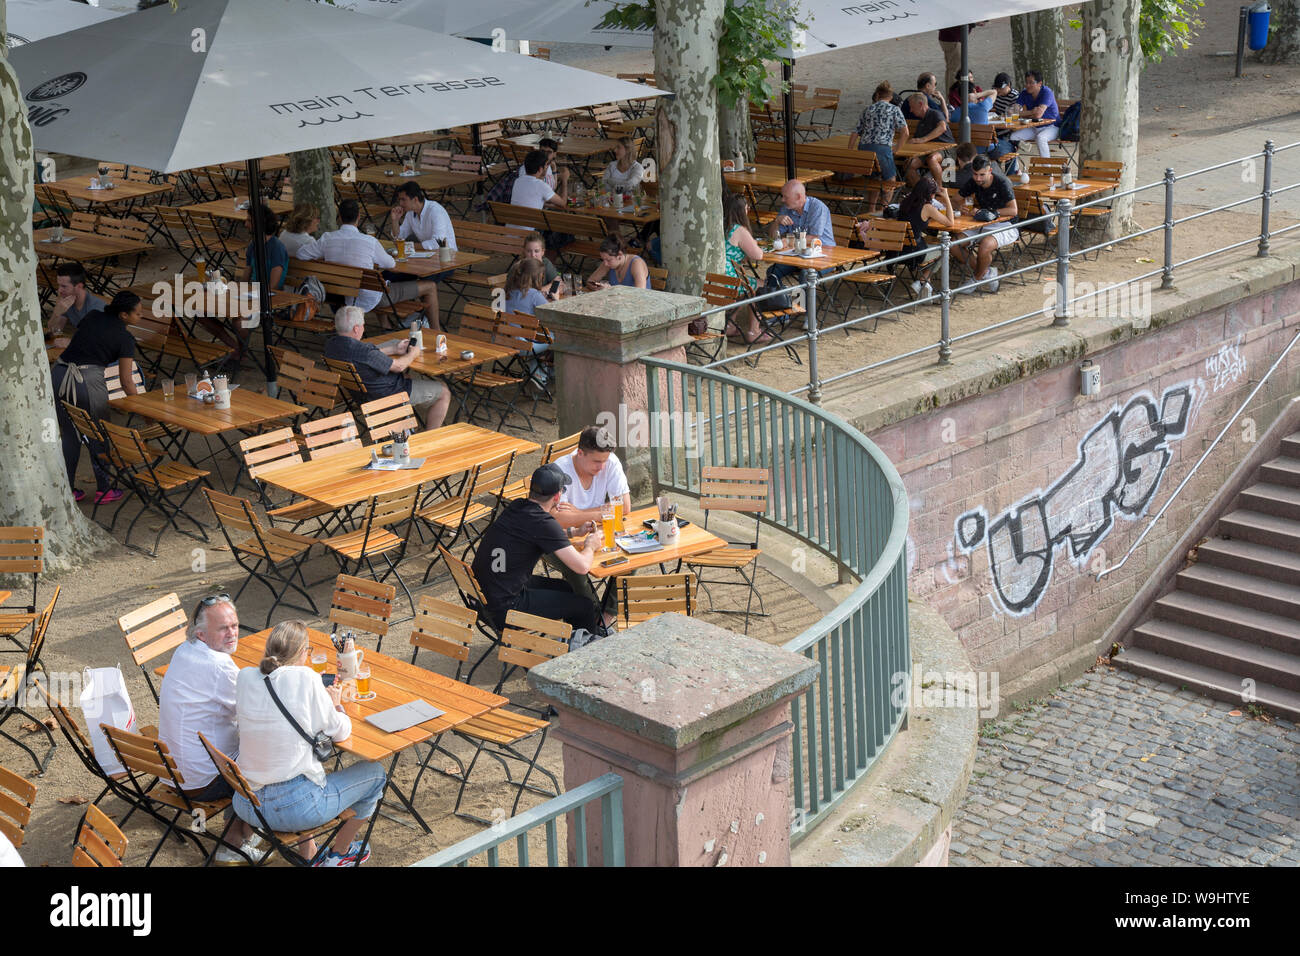 Main Terrasse Cafe Terrace; Frankfurt; Germany Stock Photo - Alamy